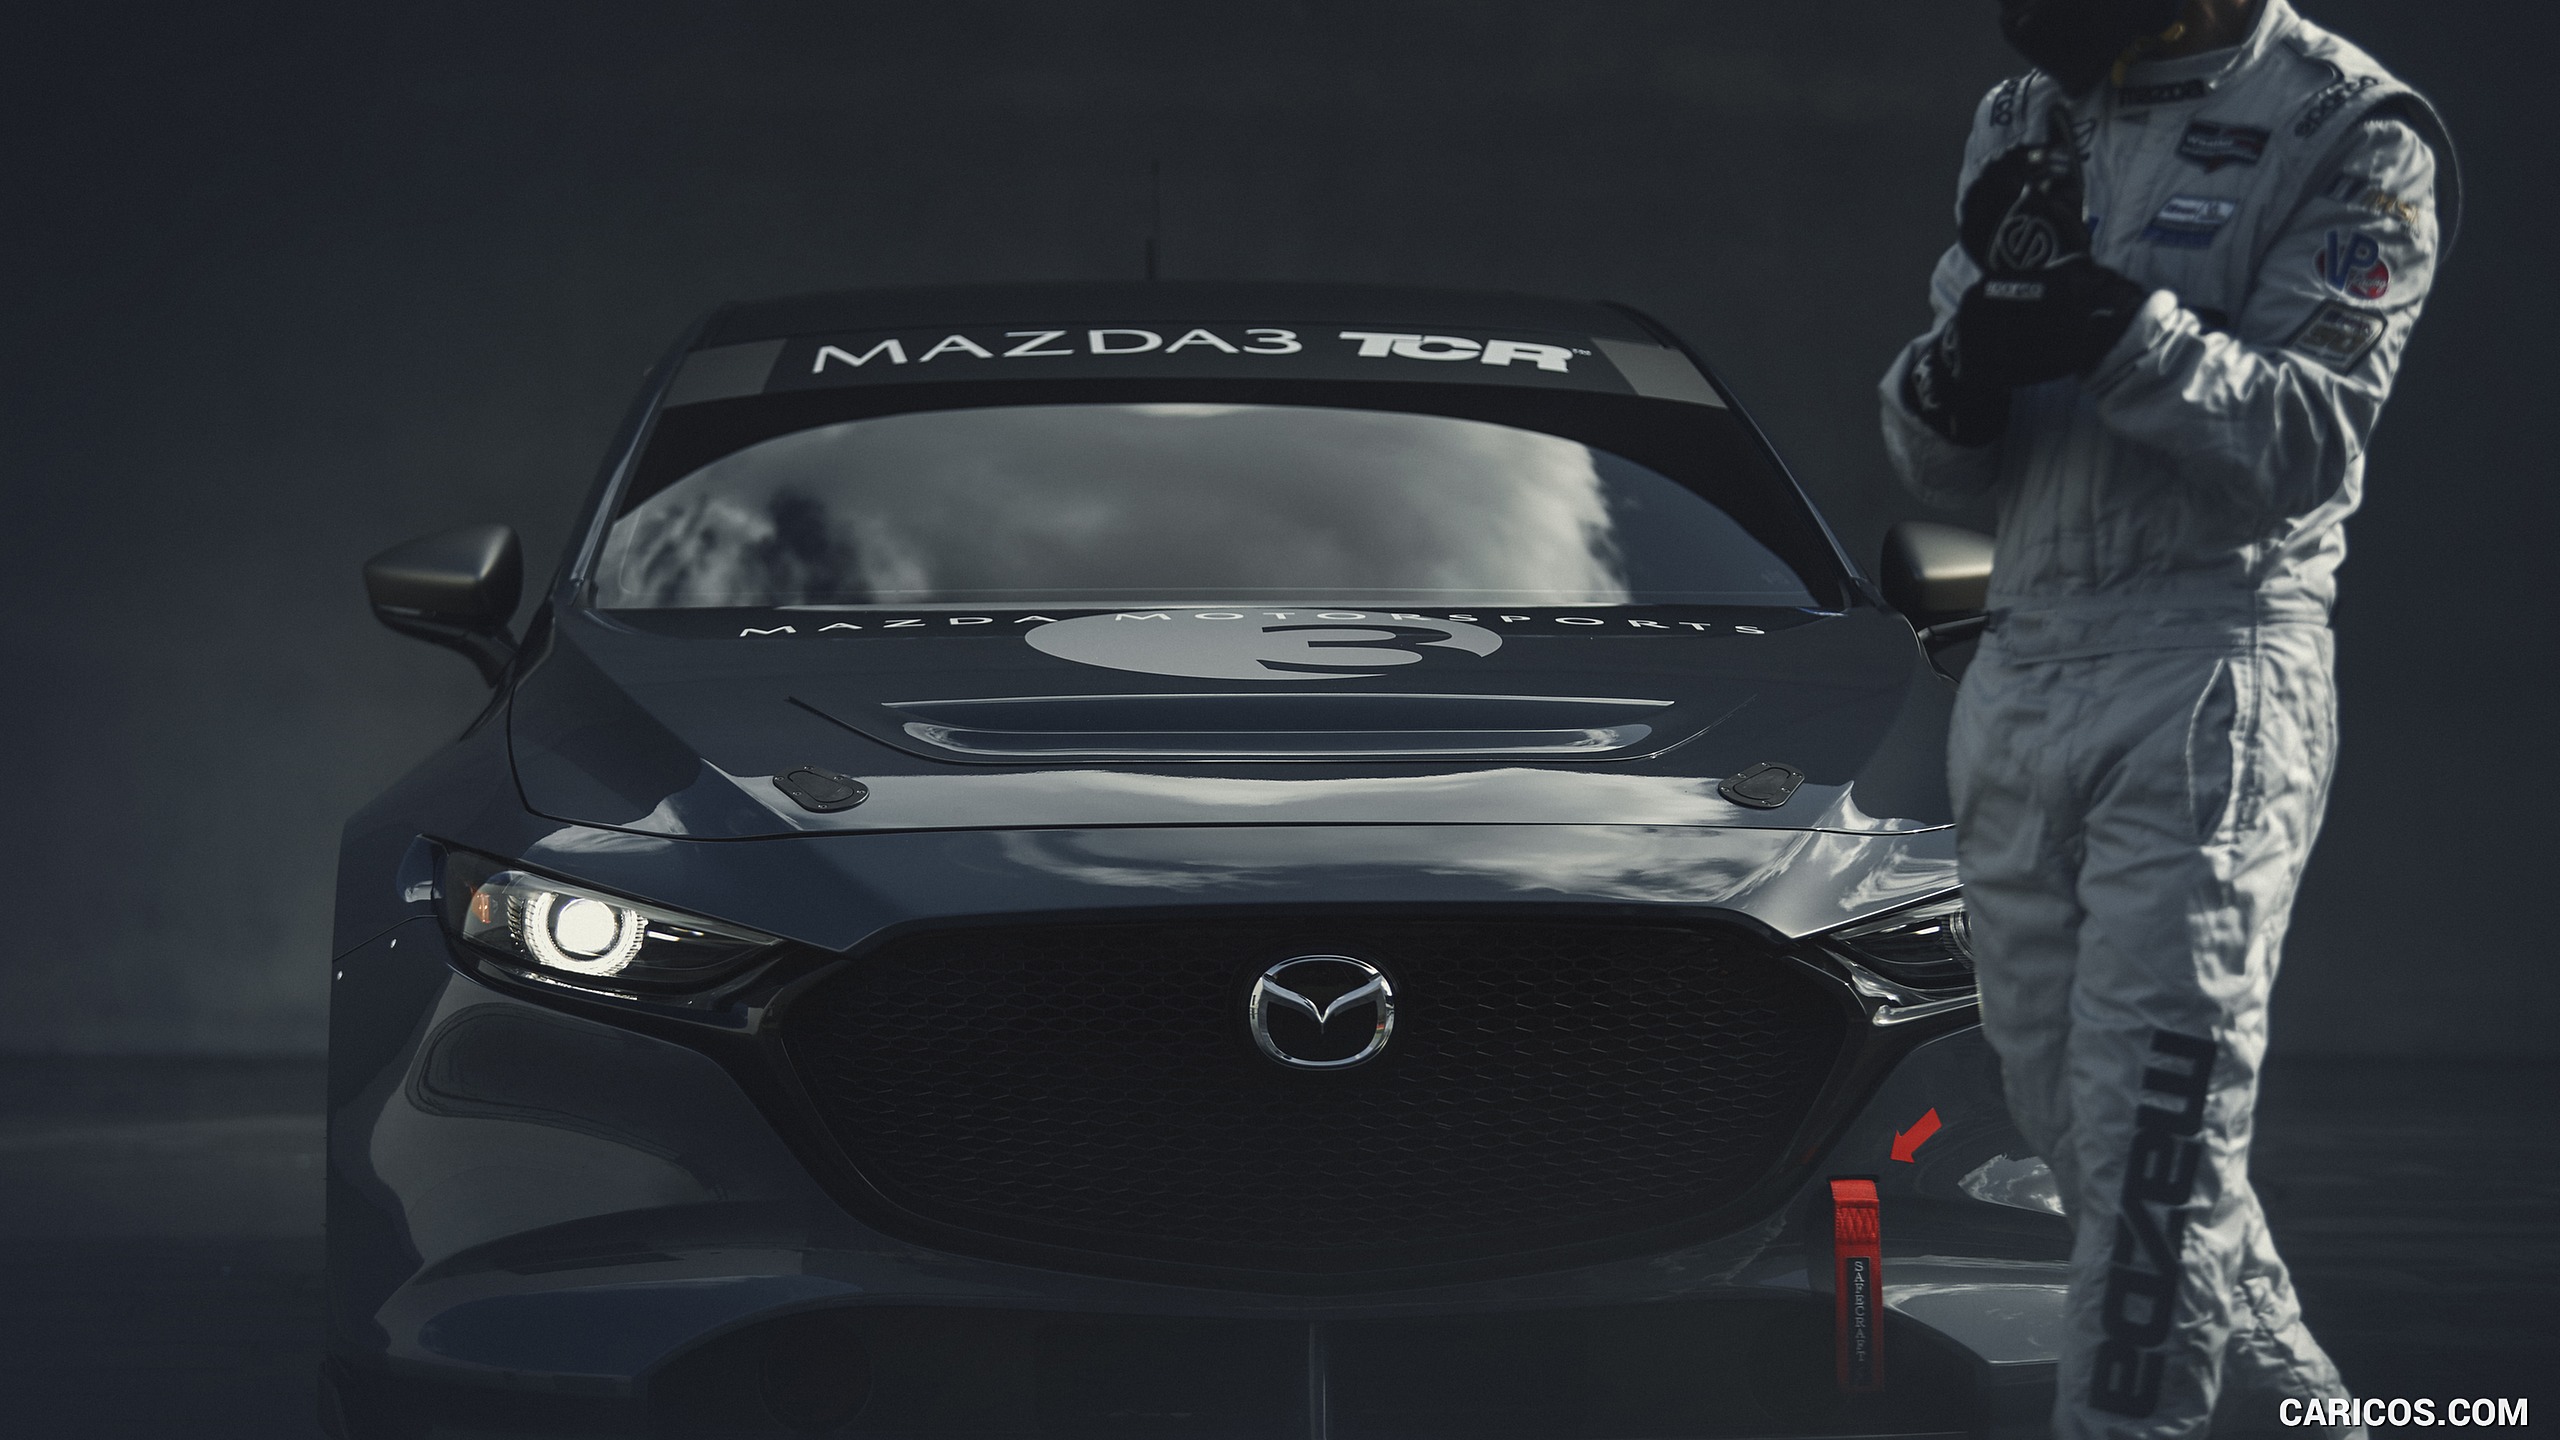 2020 Mazda3 TCR - Detail, #13 of 13